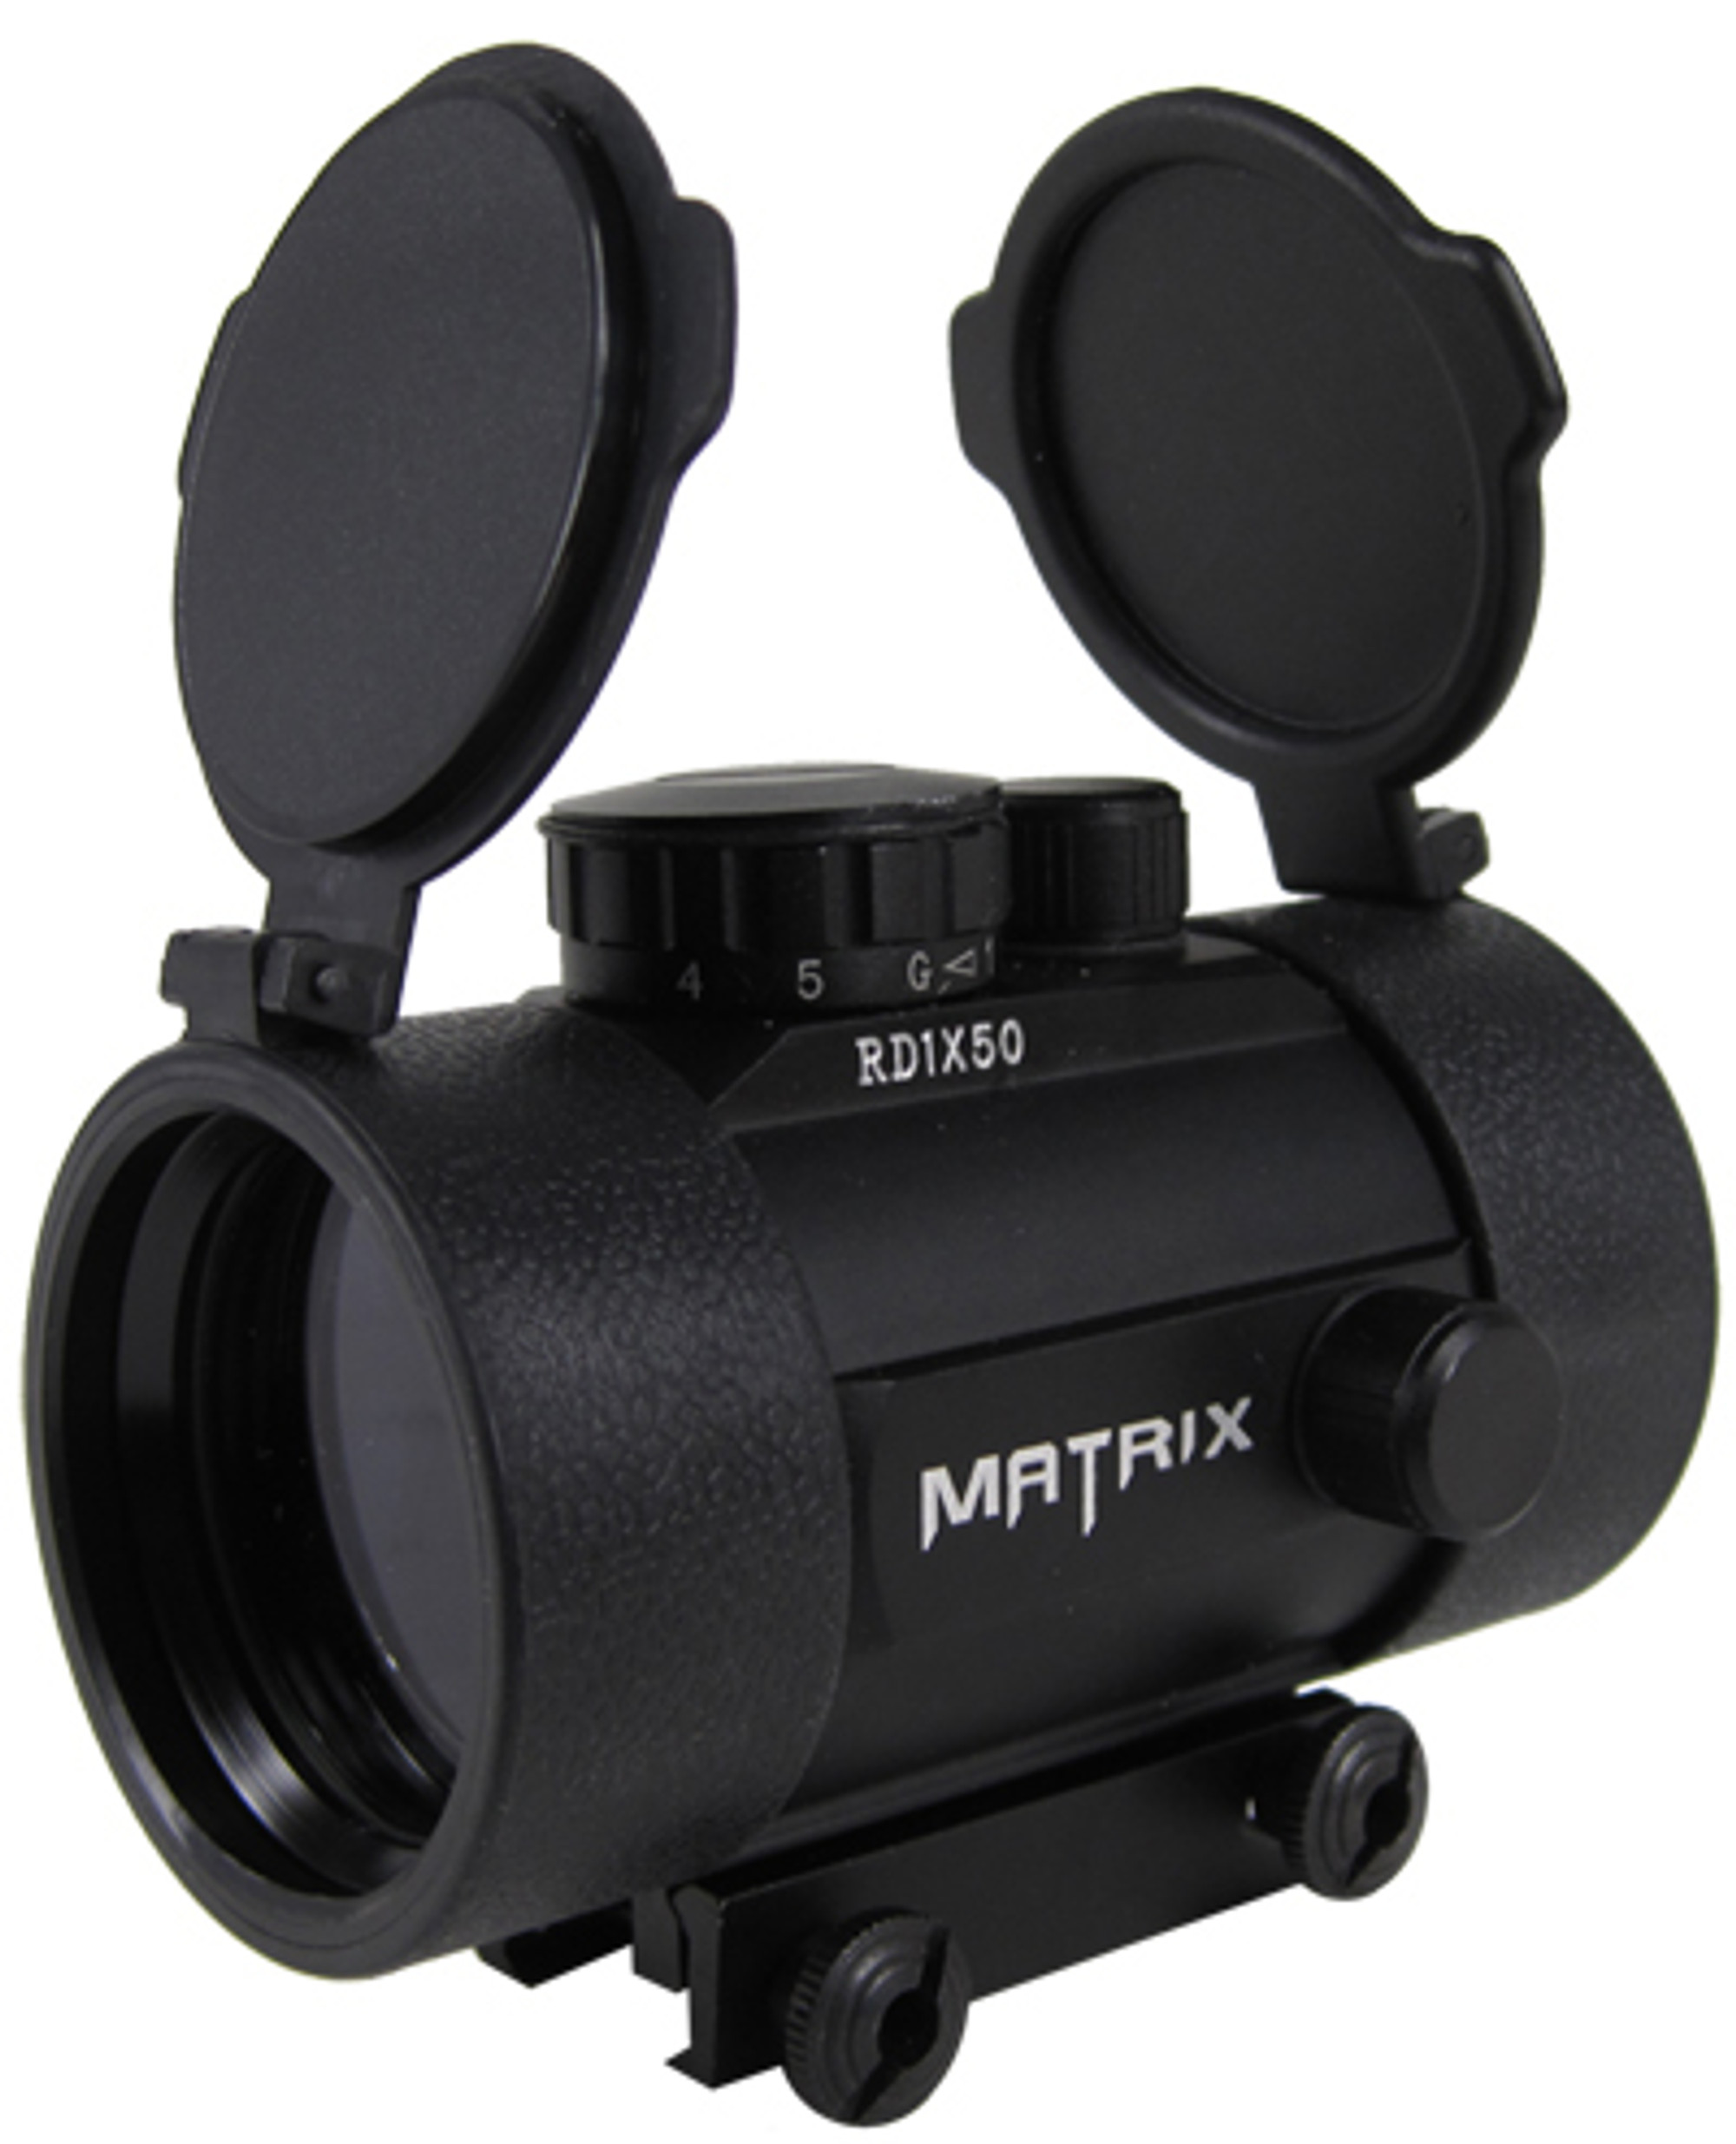 Matrix 1x50 Military Style Illuminated Red / Green Dot Sight Scope w/ QD Weaver Base & Flip-Up Lens Caps